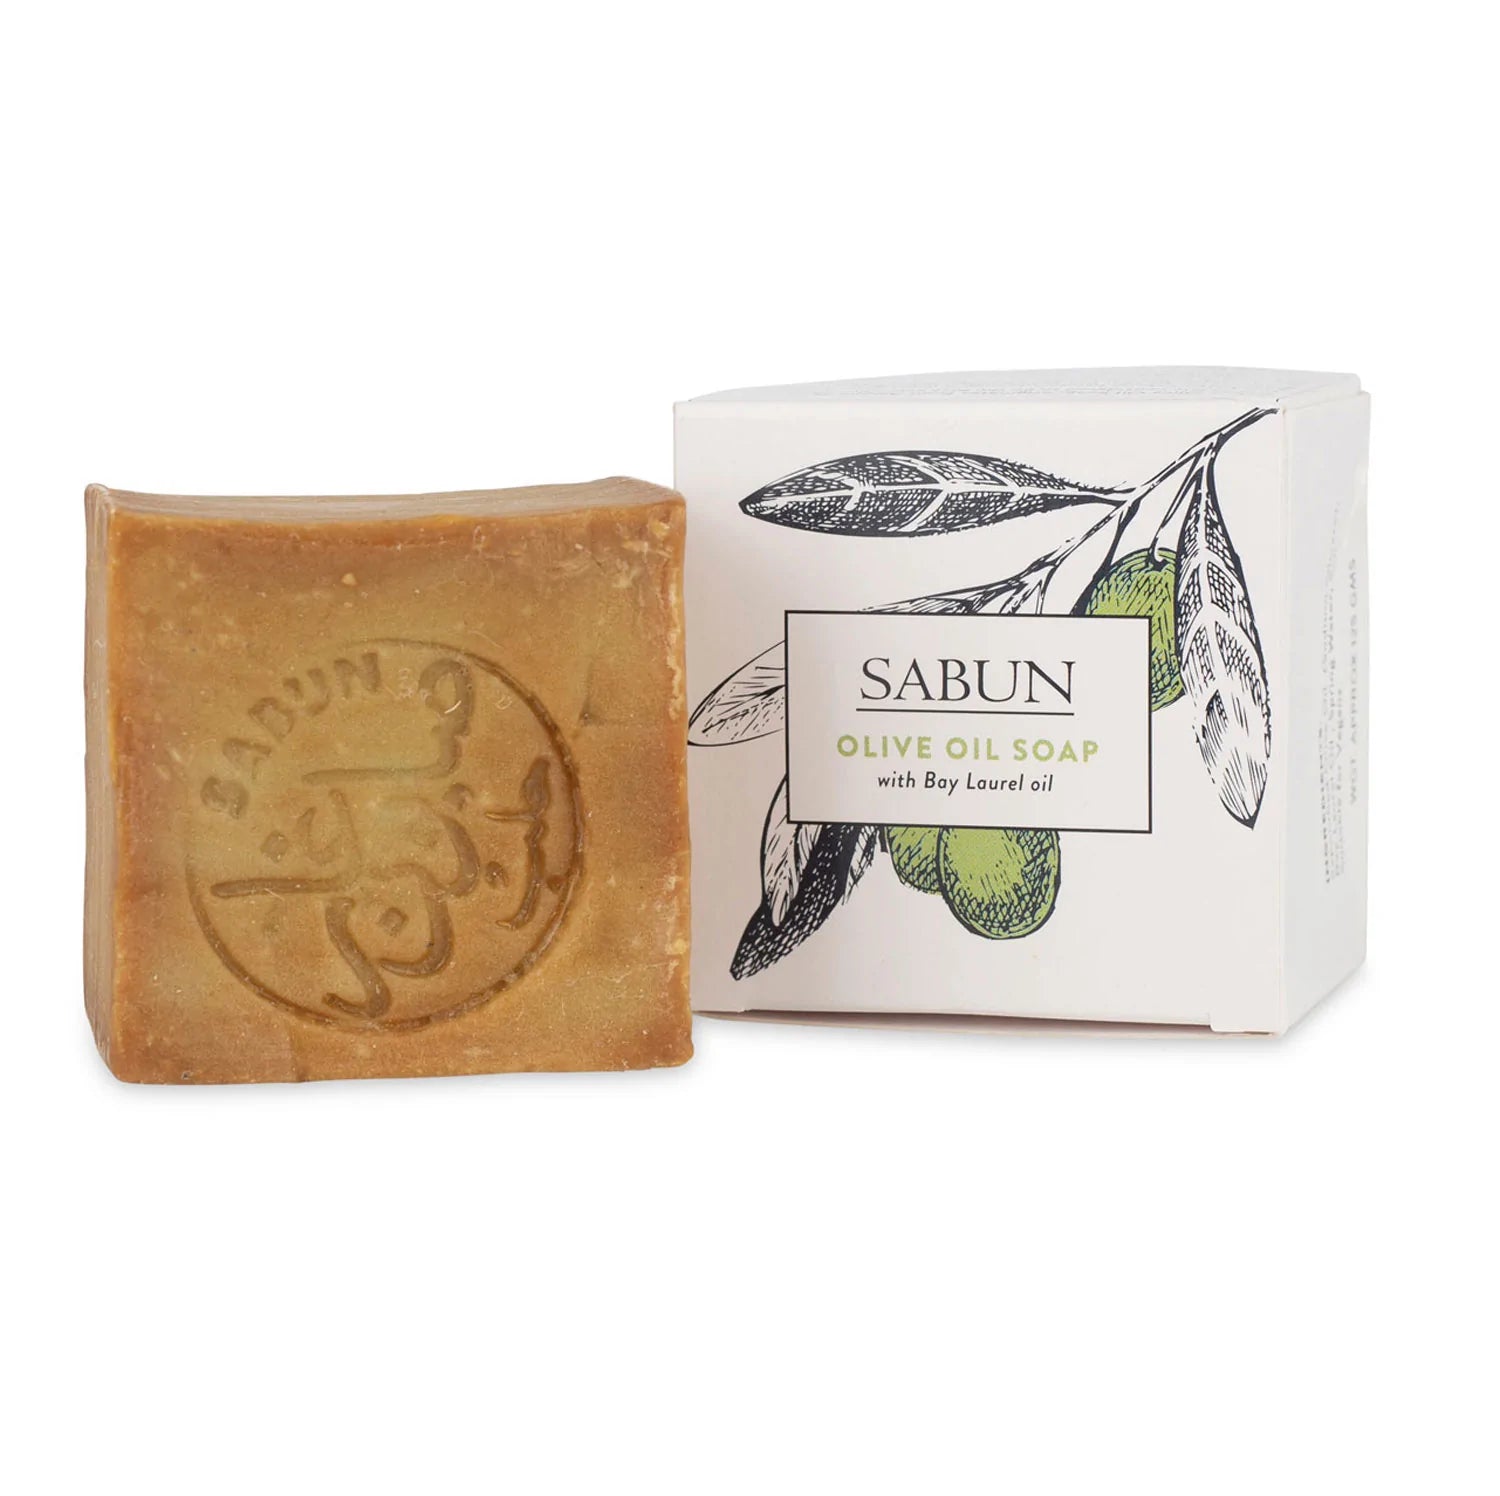 Sabun Olive Oil Soap